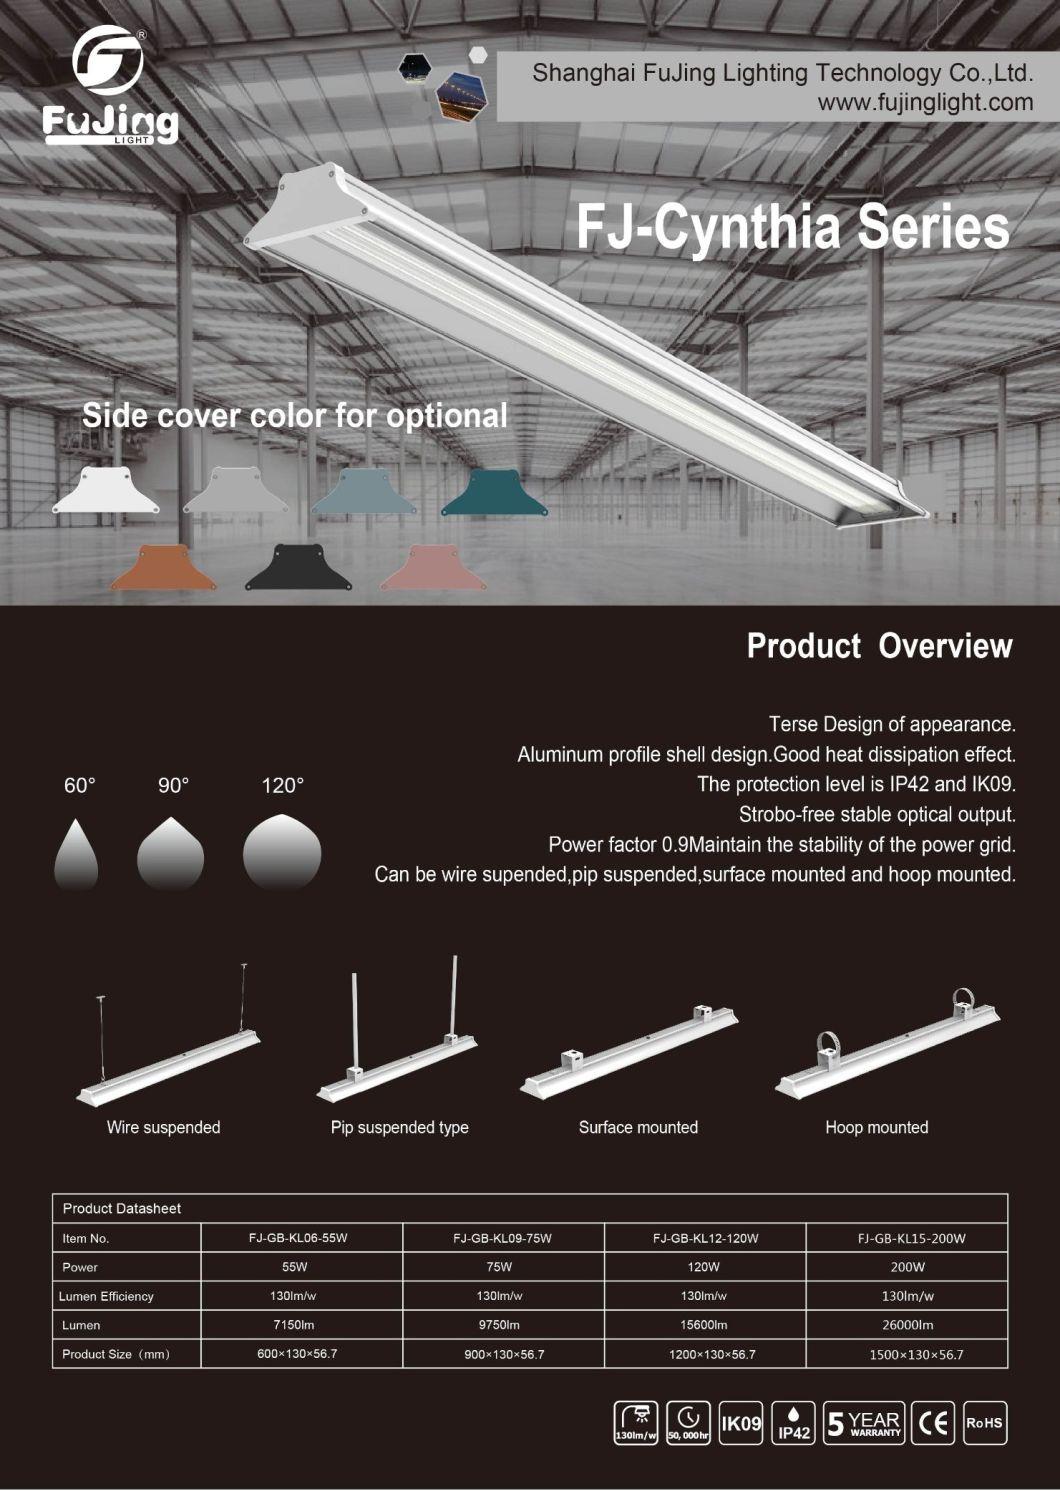 Hot Selling LED High Bay Light High Lumen Efficiency 150lm/W Industrial Light LED Linear Light